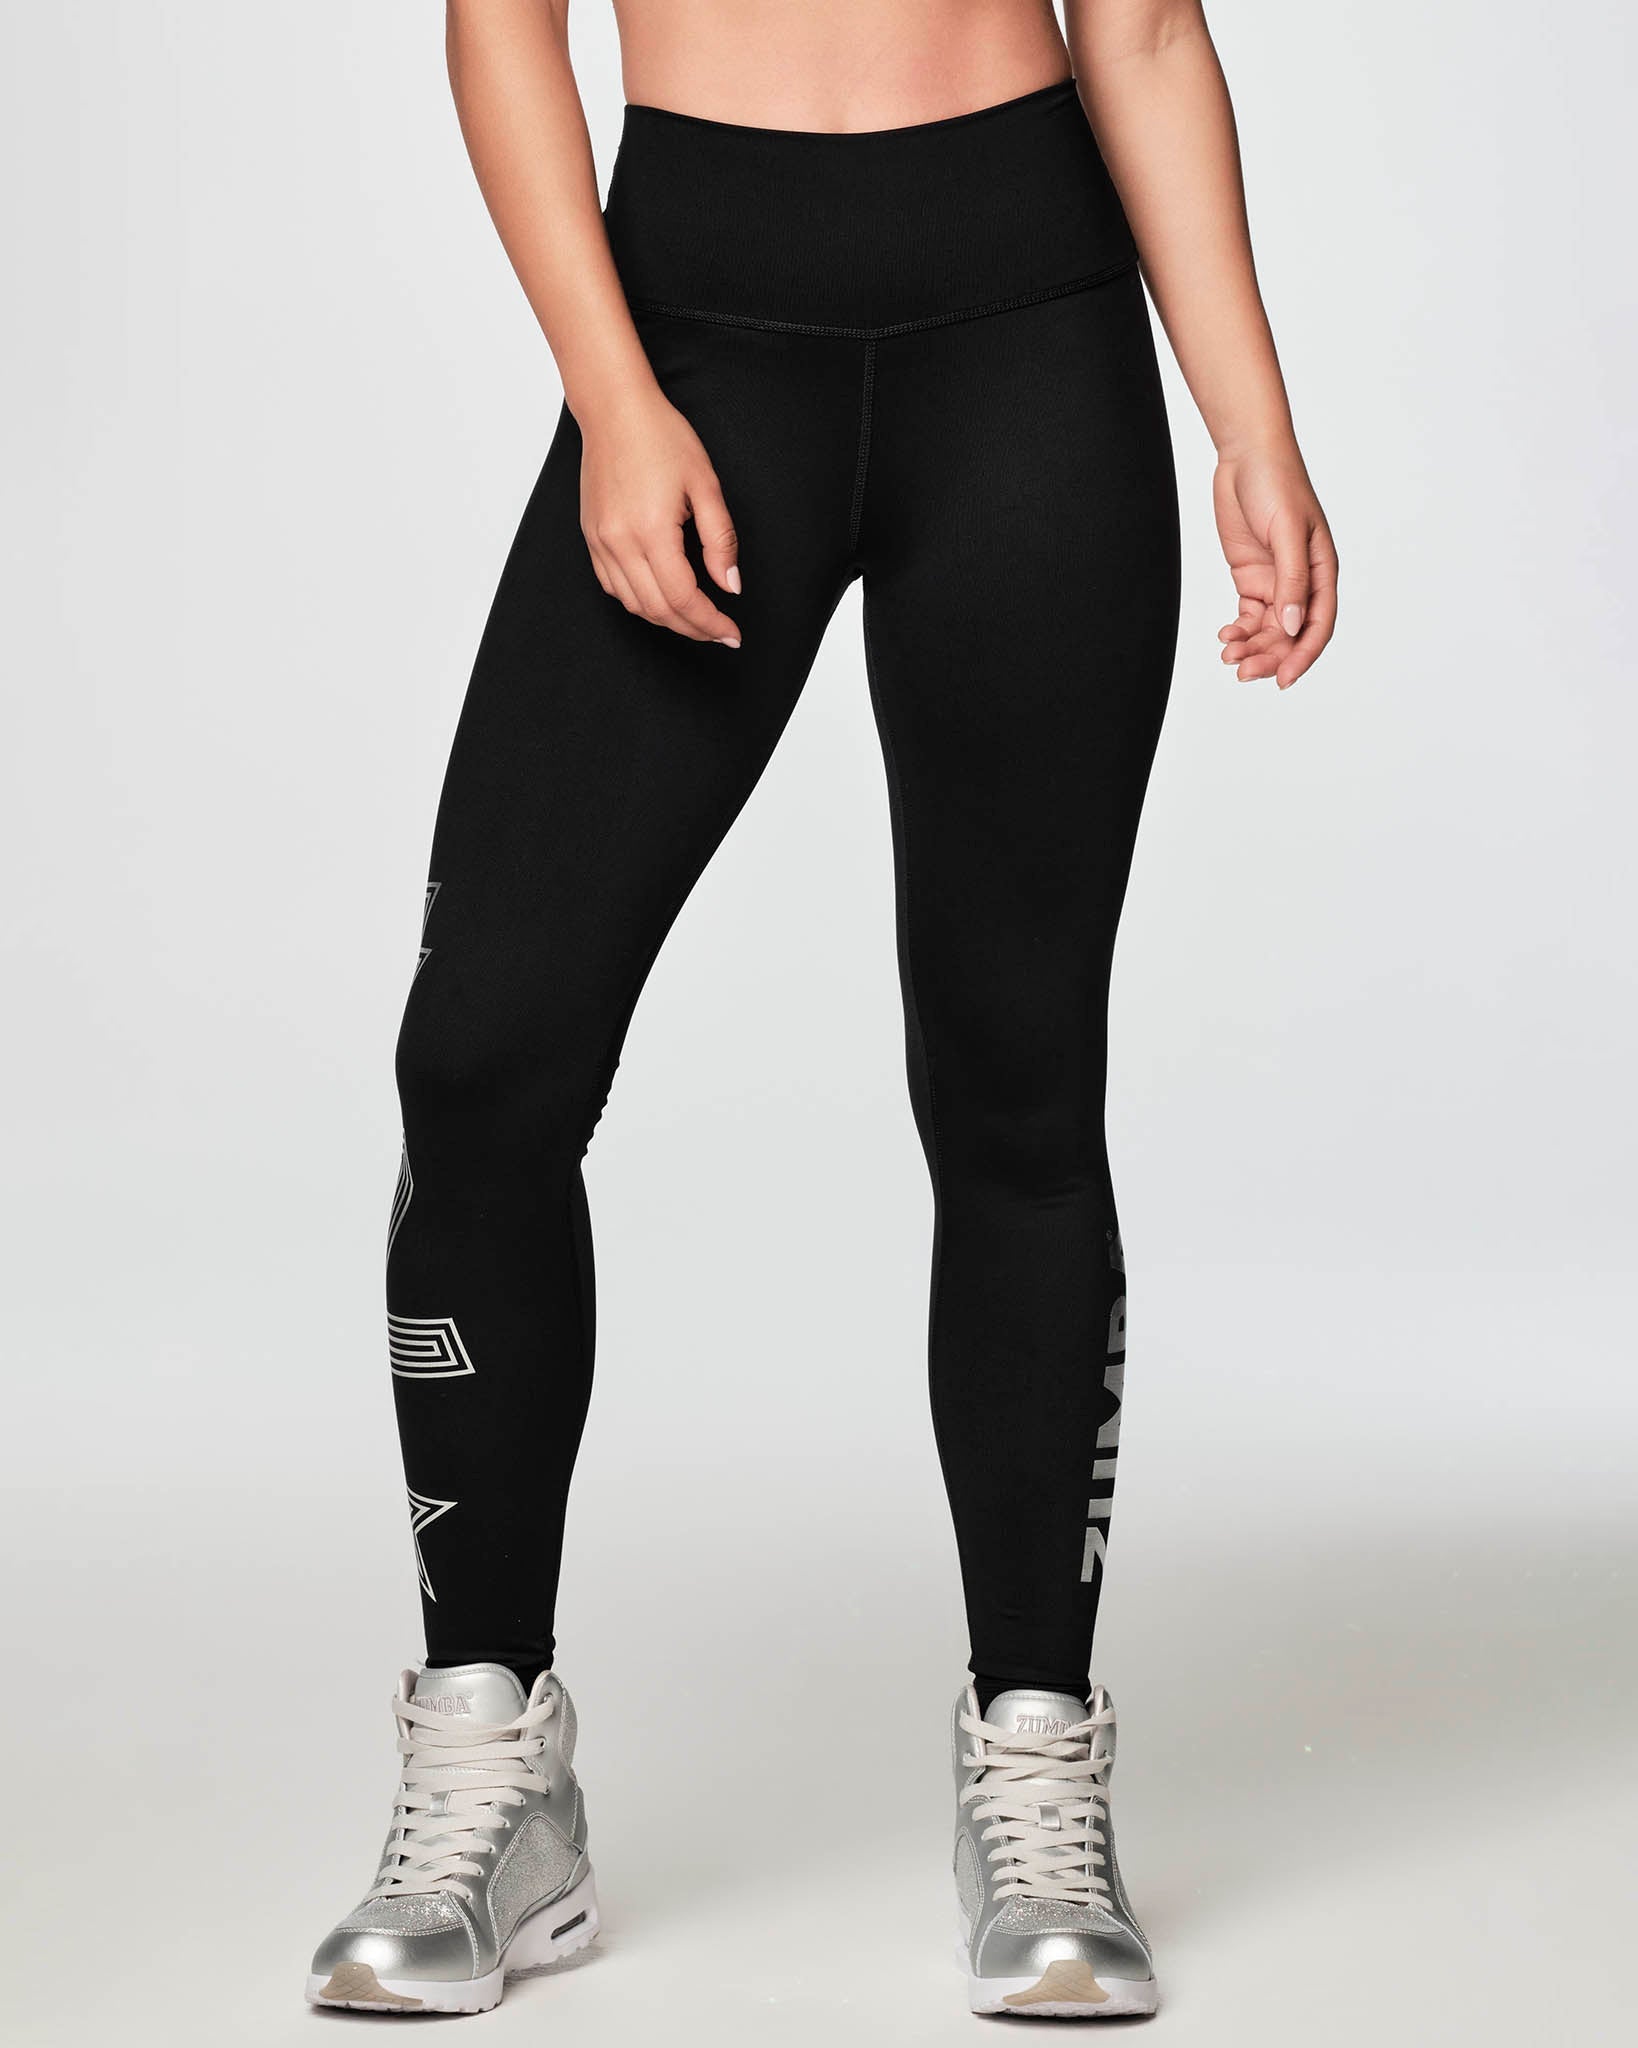 Sport leggings for Women Joluvi Fit - Flex Black – Moon Behind The Hill